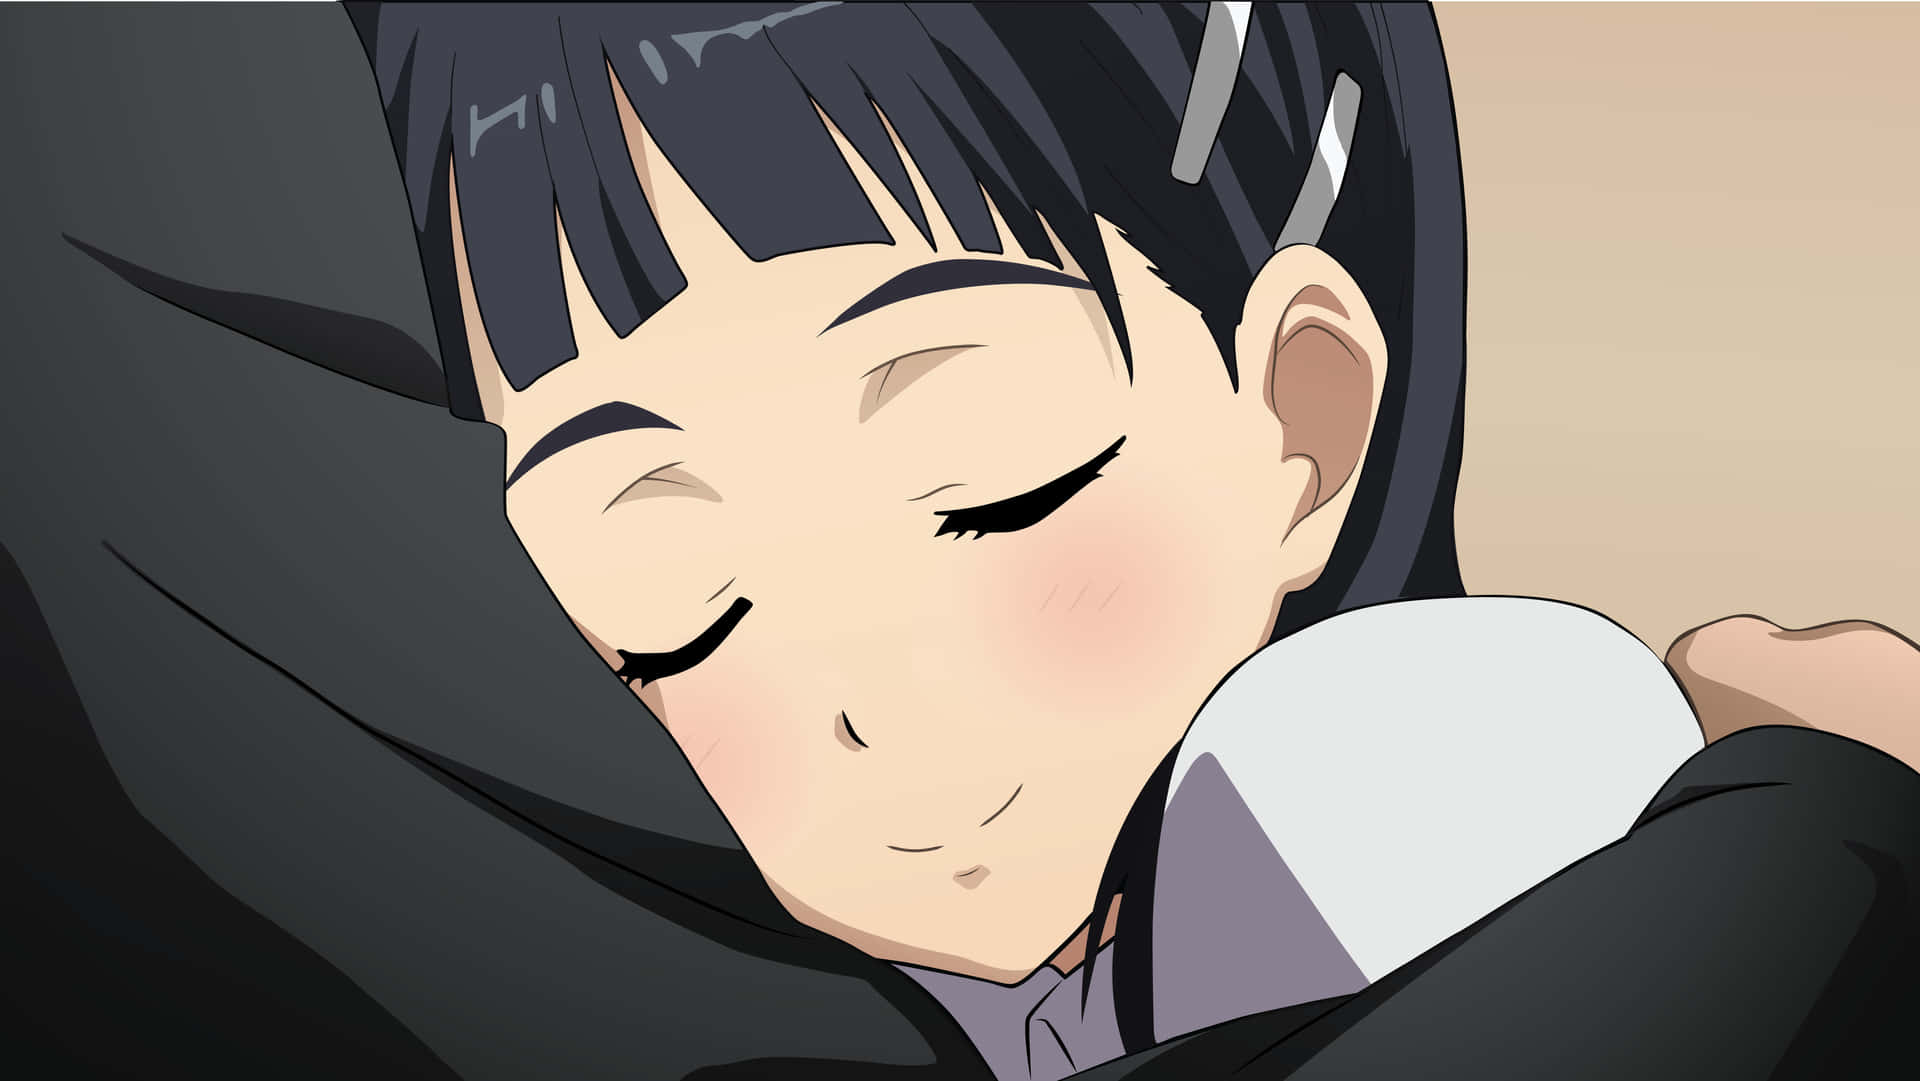 Suguhakirigaya Adopta Una Postura Segura En Su Vibrante Mundo De Anime. Fondo de pantalla